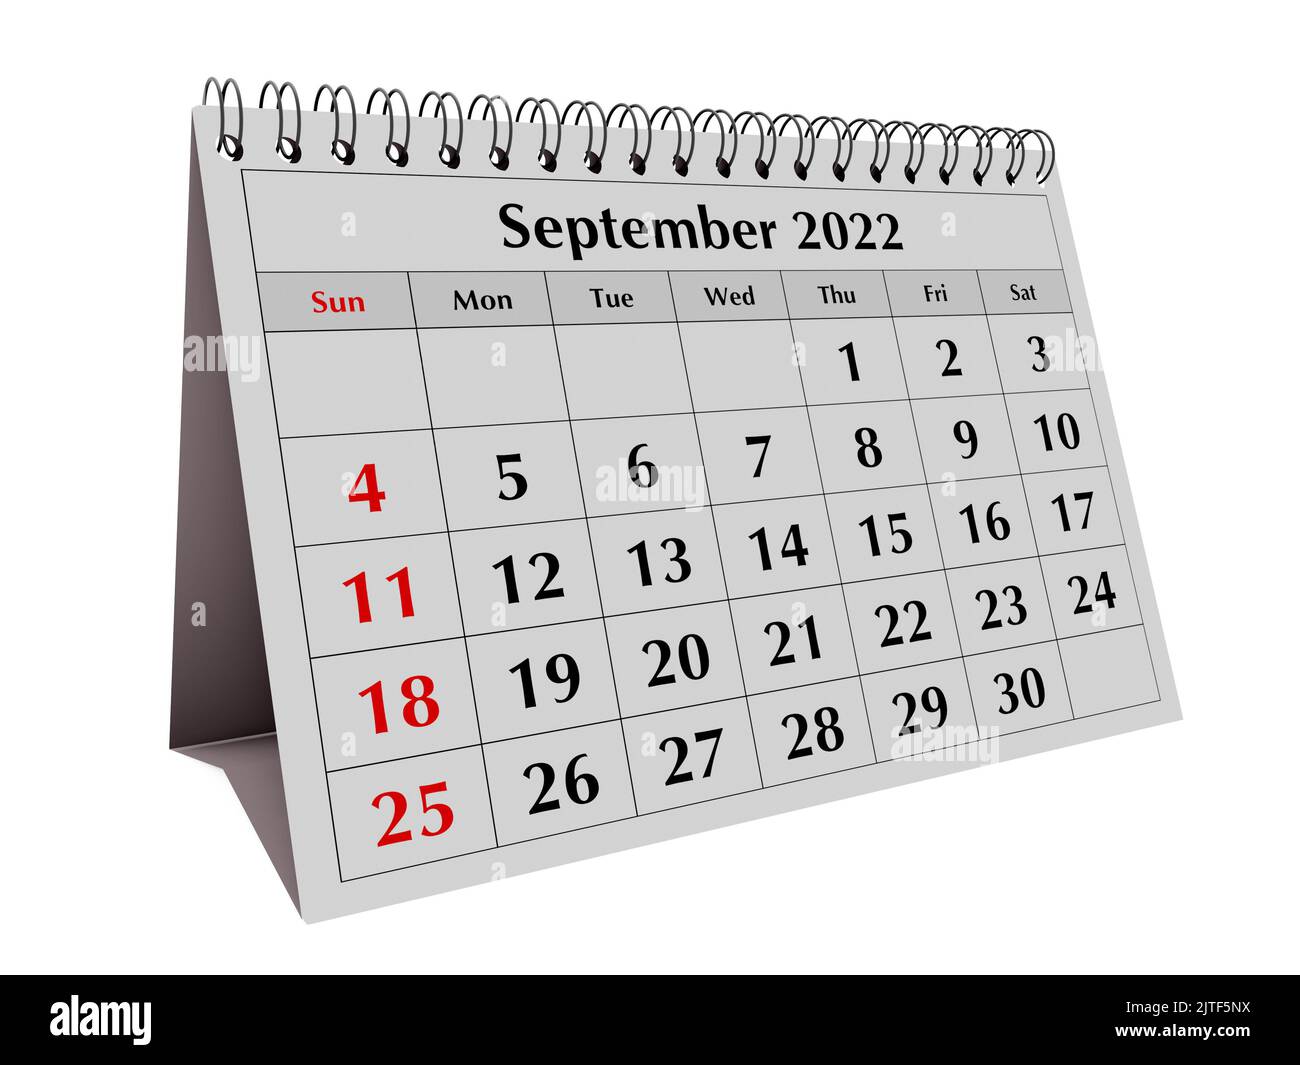 Calendrier planning octobre 2021 - septembre 2022, illustrations à